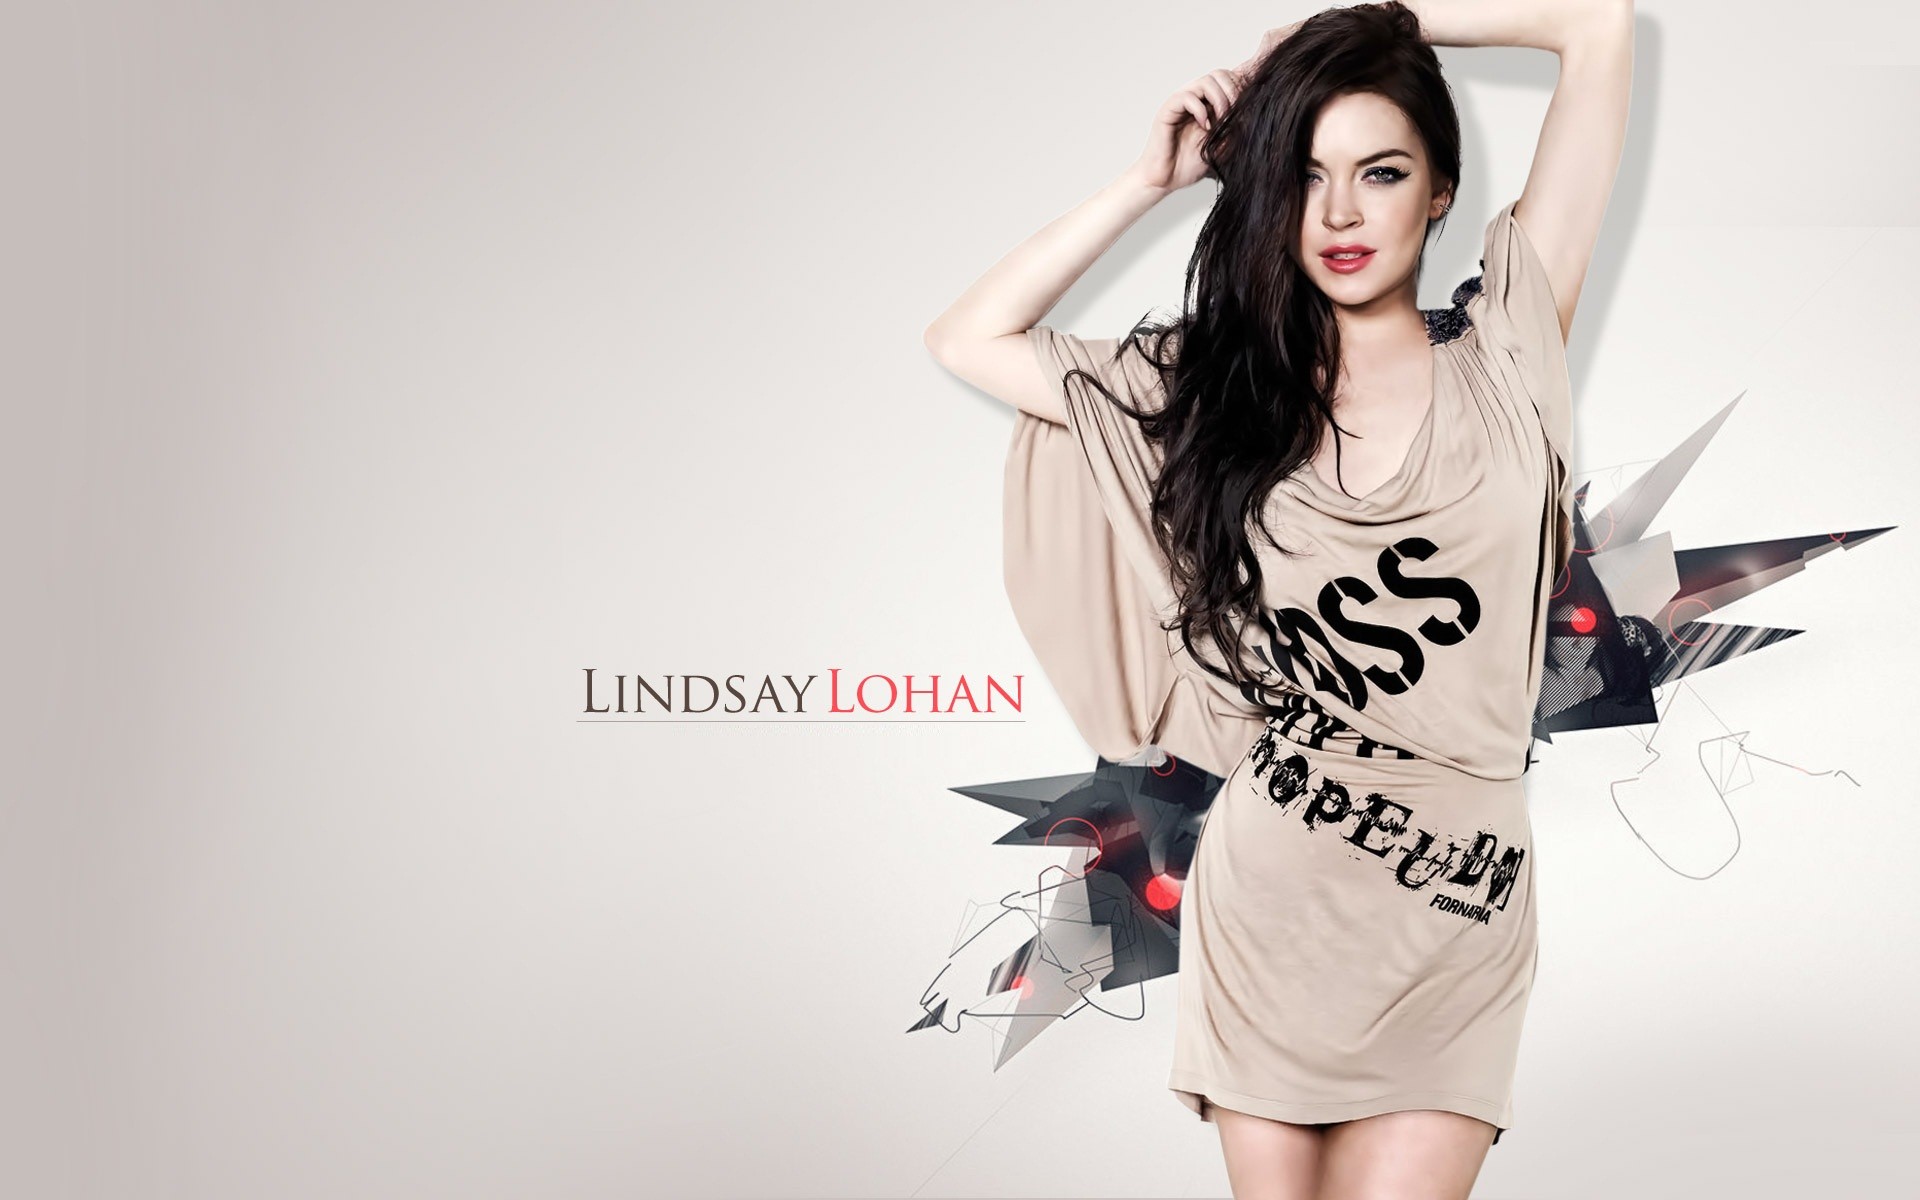 Lindsay lohan background 104929231